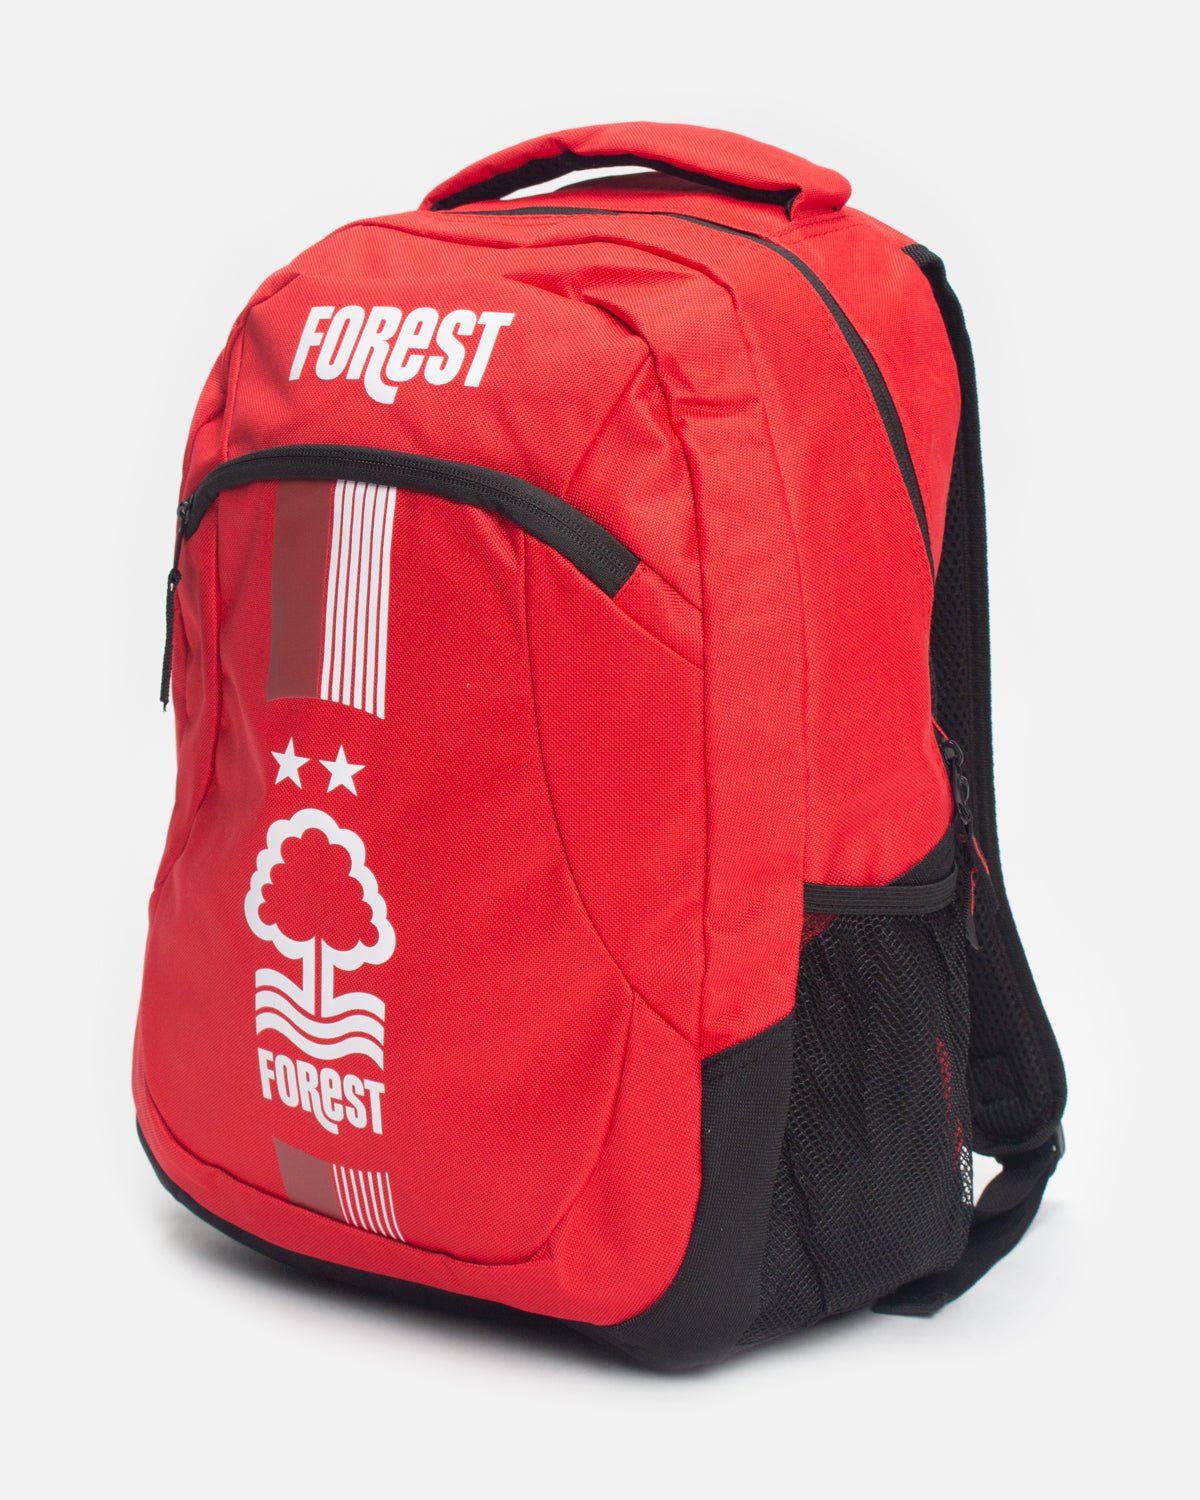 NFFC Ultra Action Backpack - Nottingham Forest FC